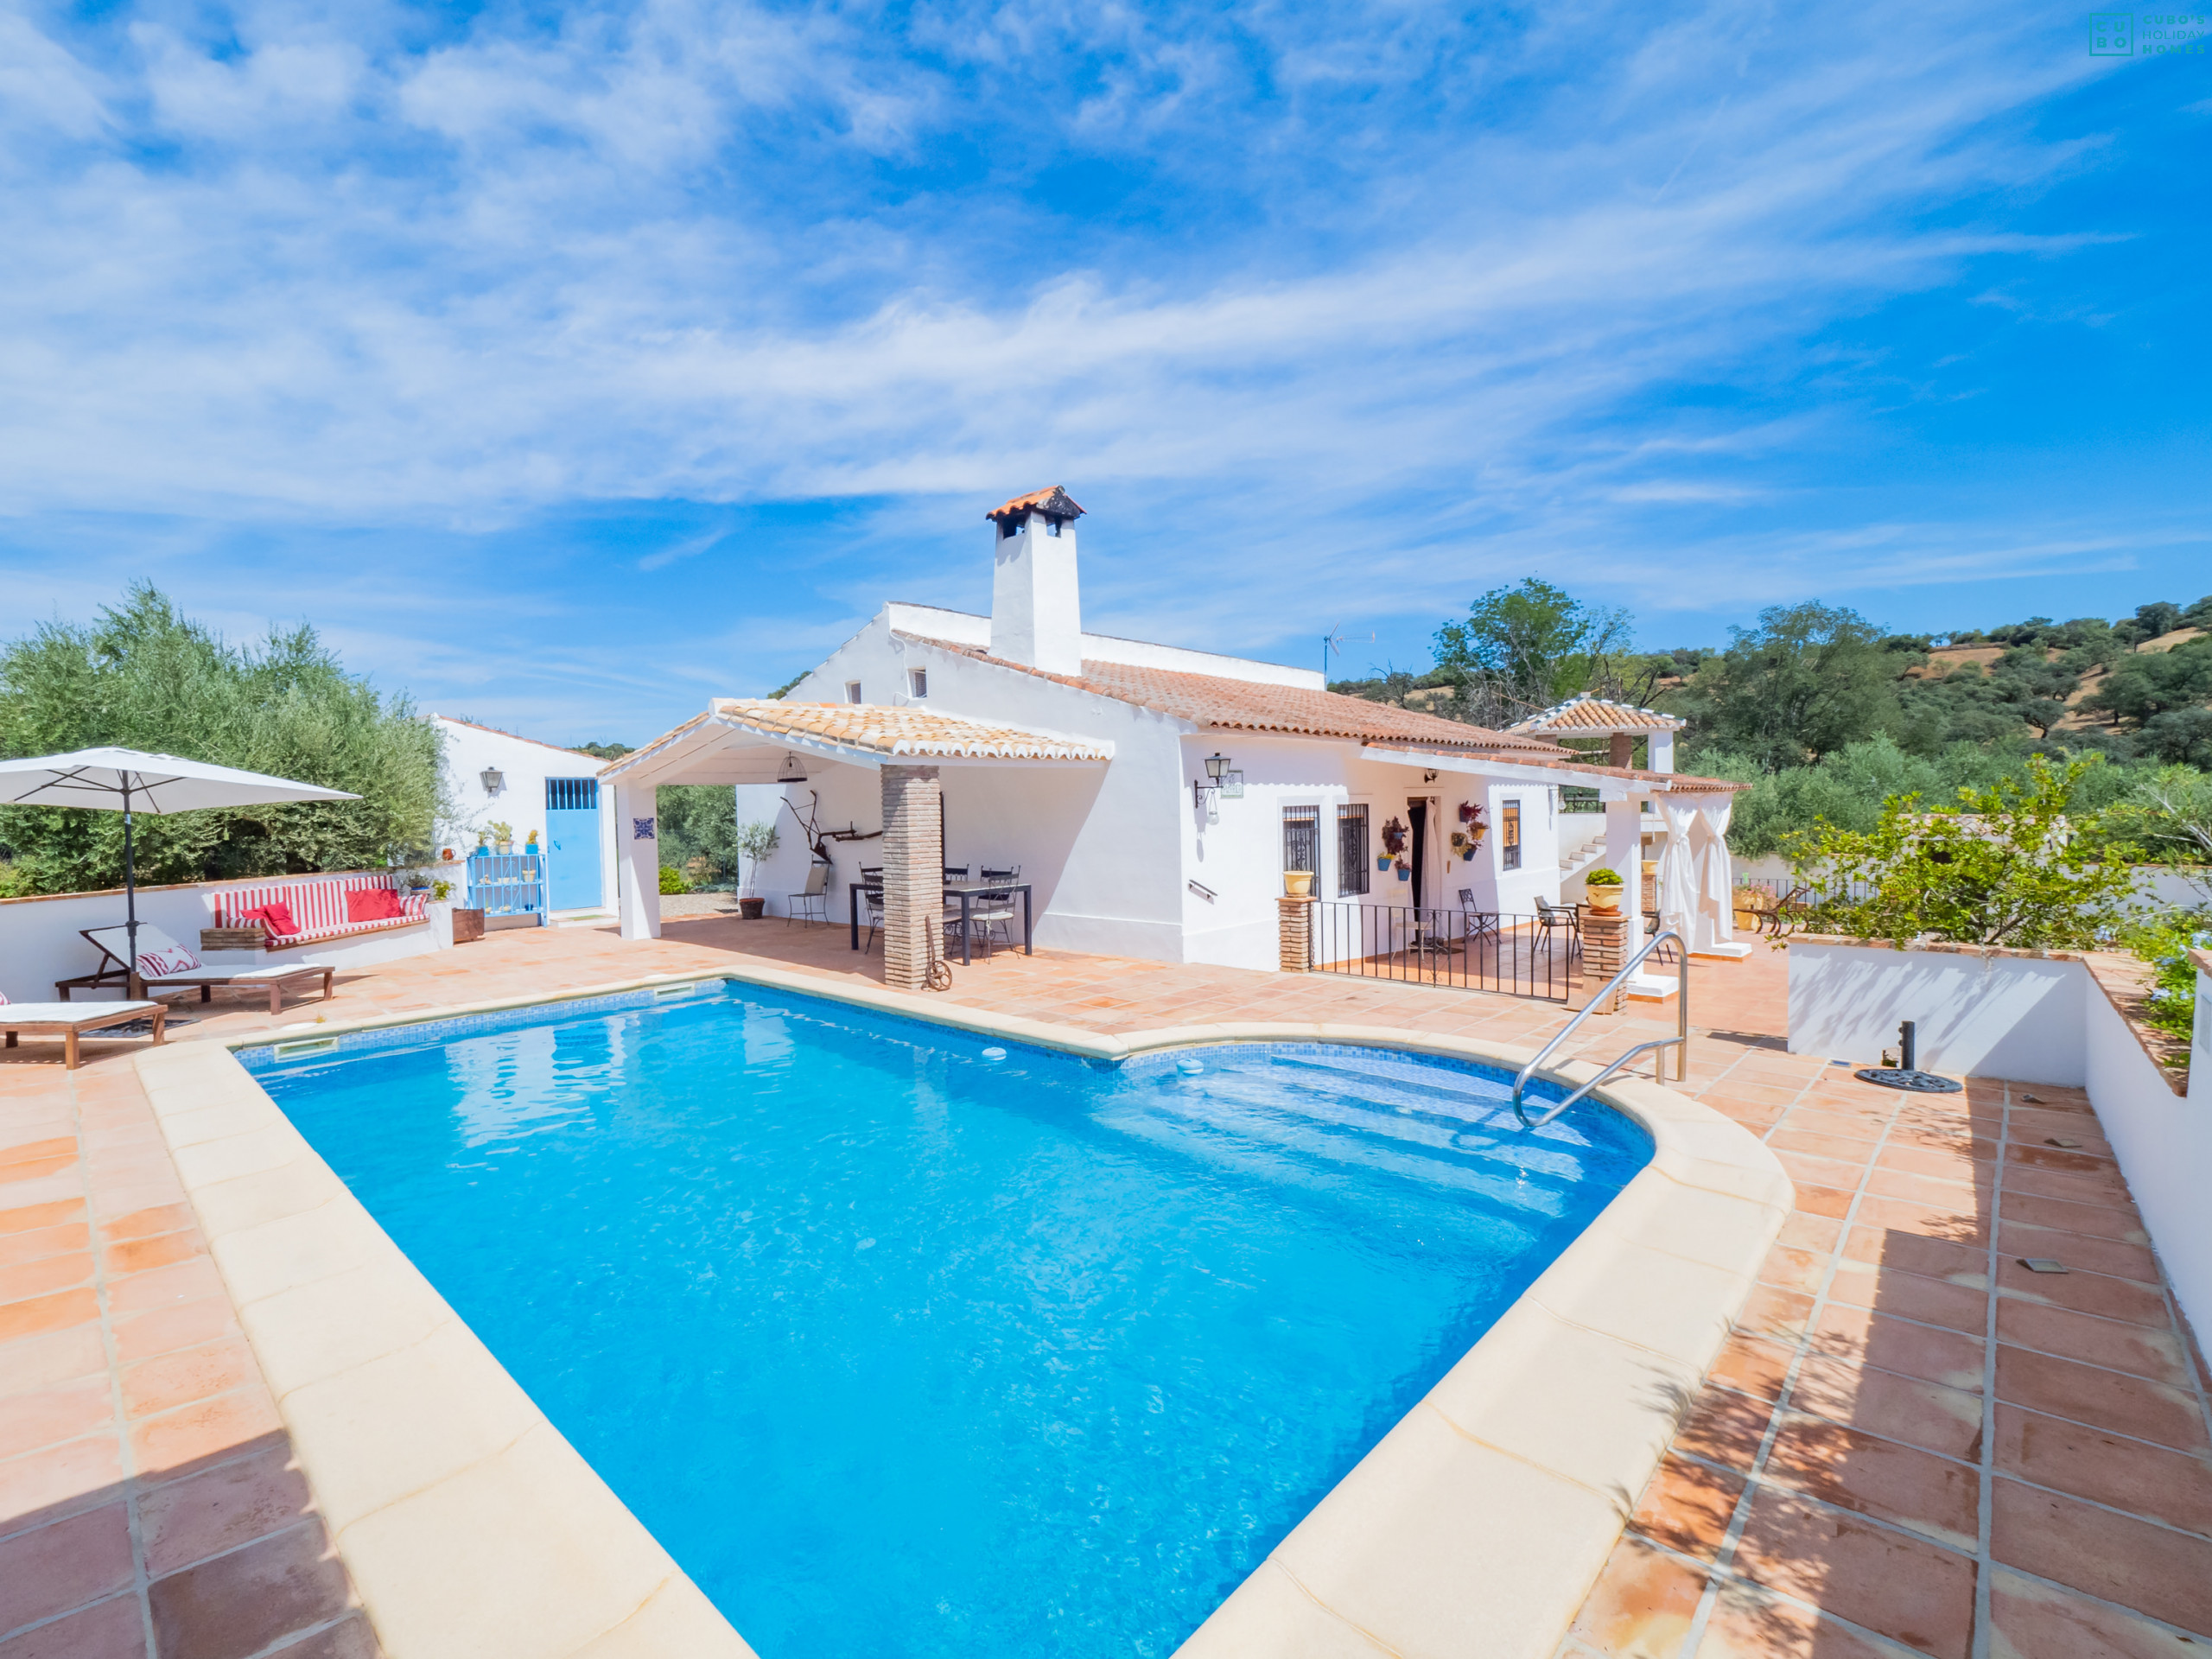 Casa rural vacacional con piscina para 7 personas en Adamuz (Córdoba)